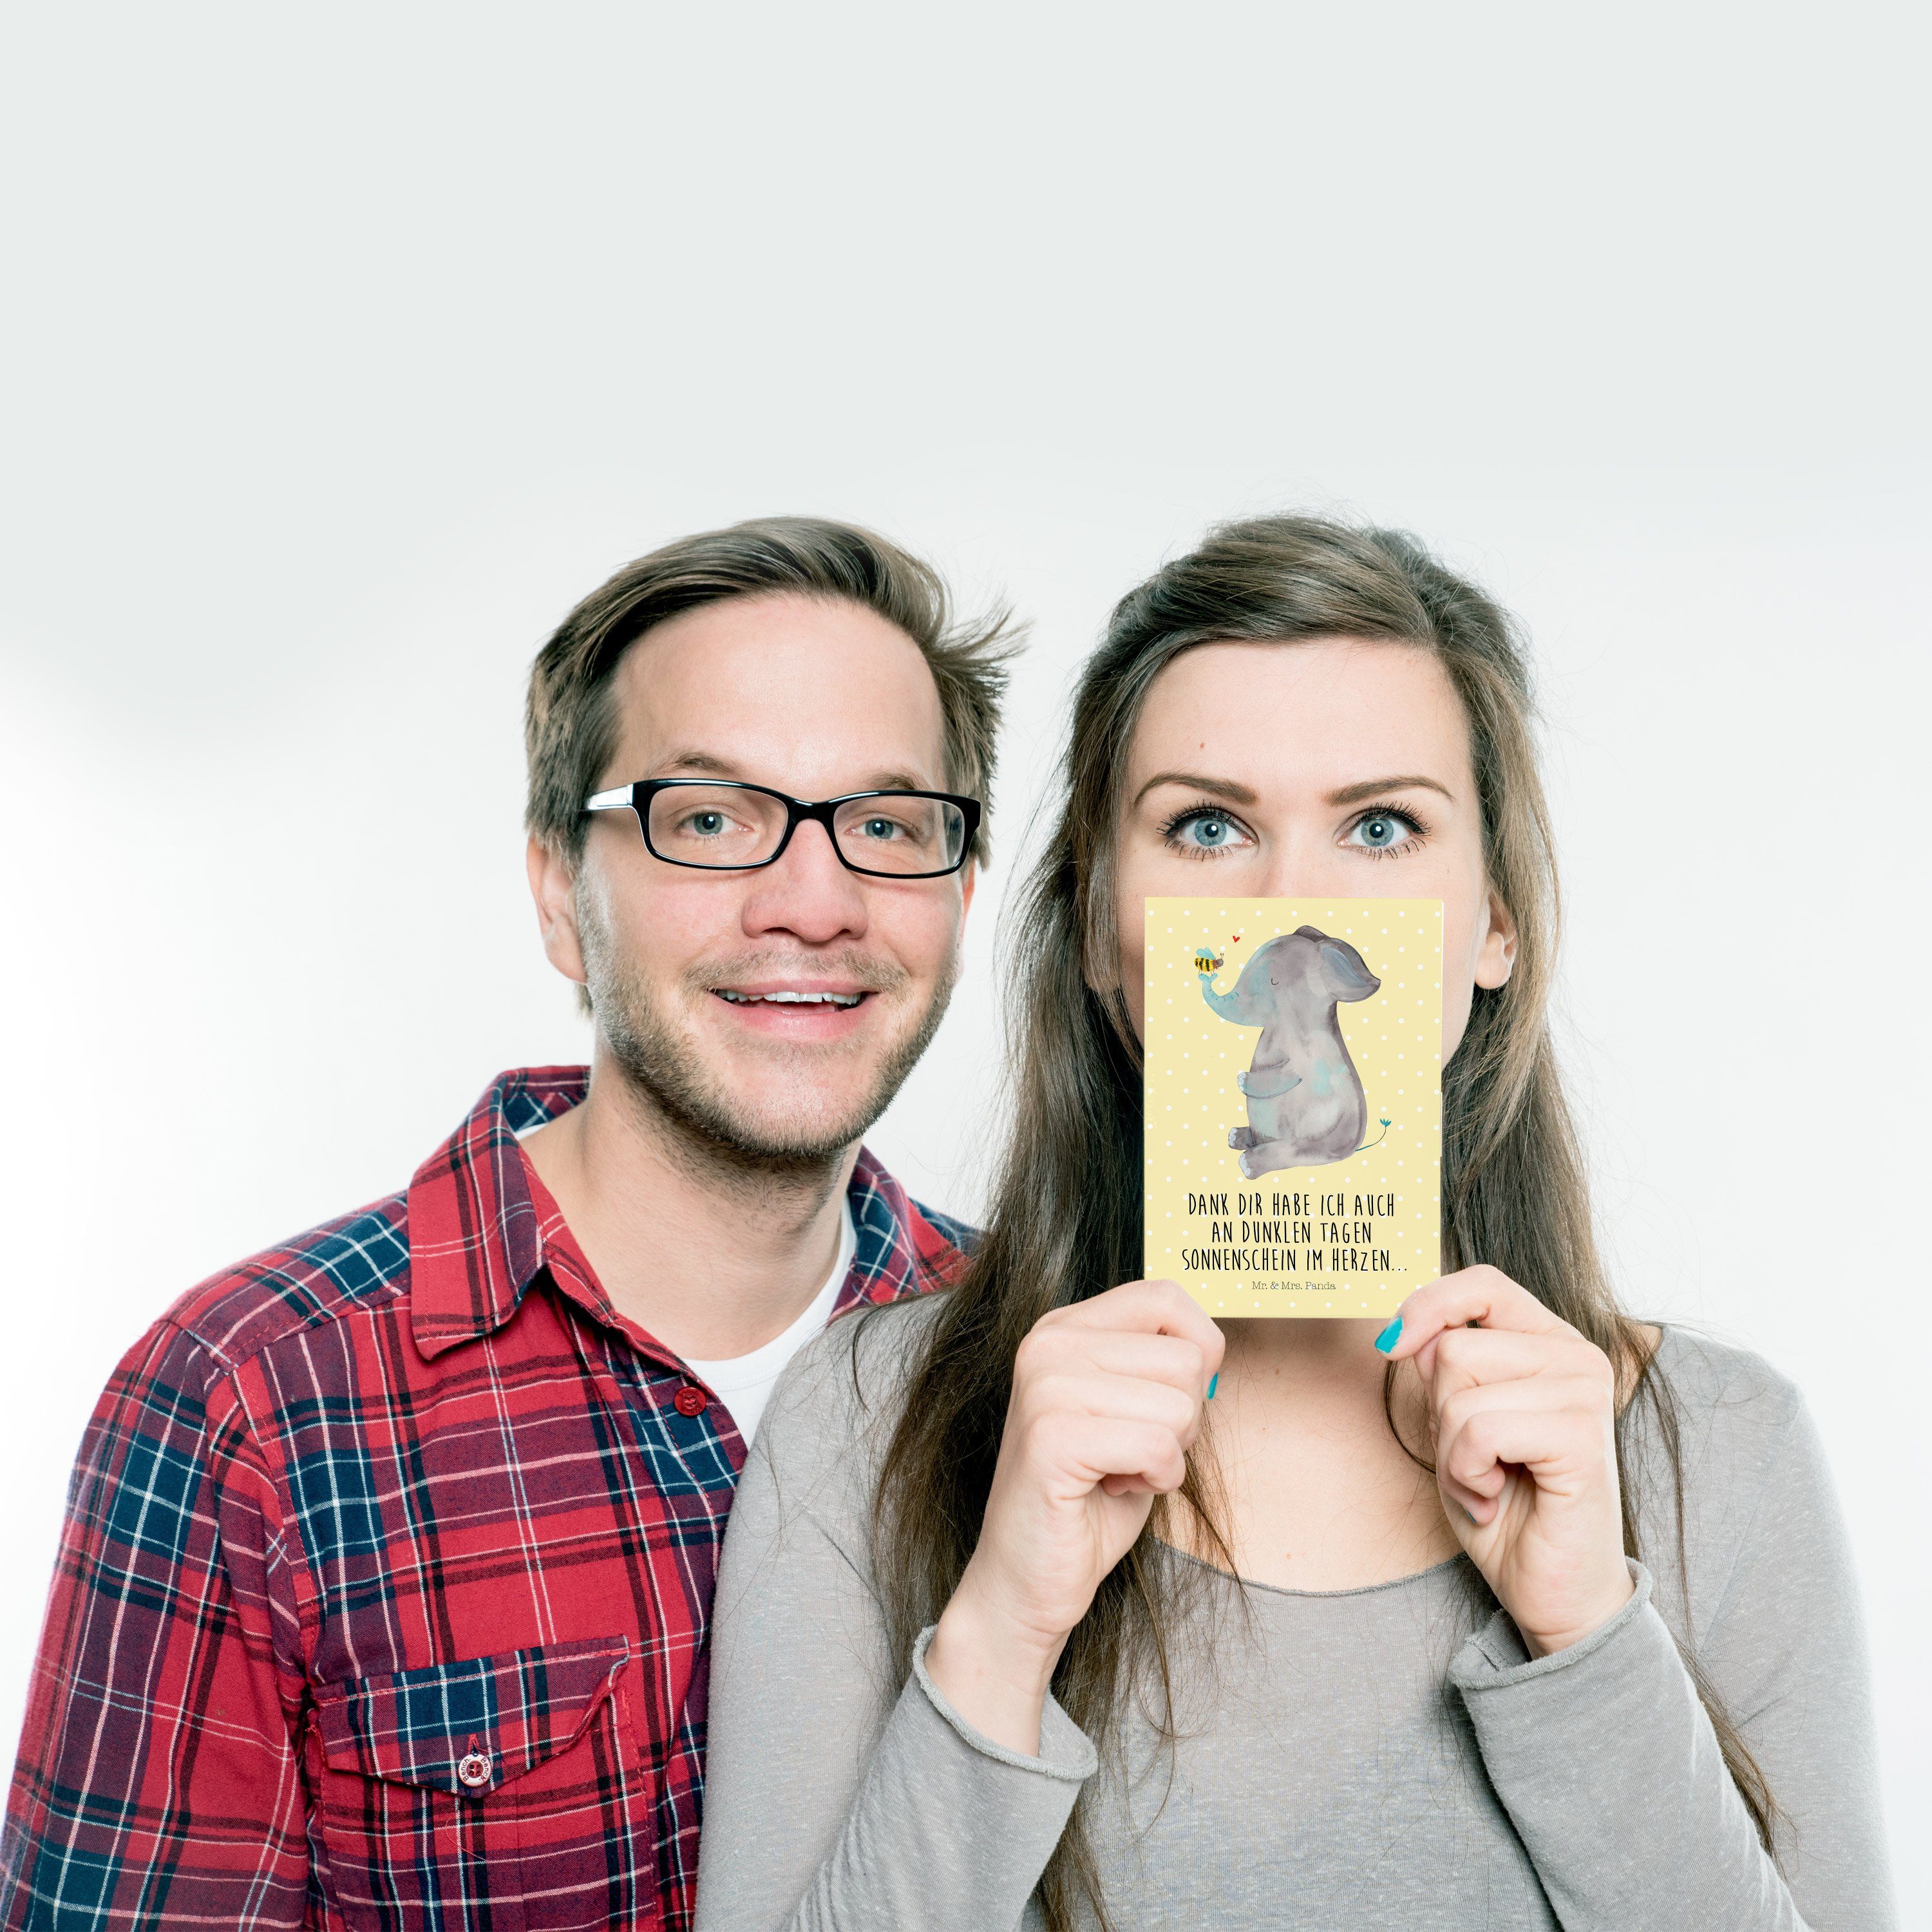 Mr. & Mrs. Panda Postkarte Gelb Laune - Gute Biene Heiratsantrag, Elefant - Geschenk, & Pastell